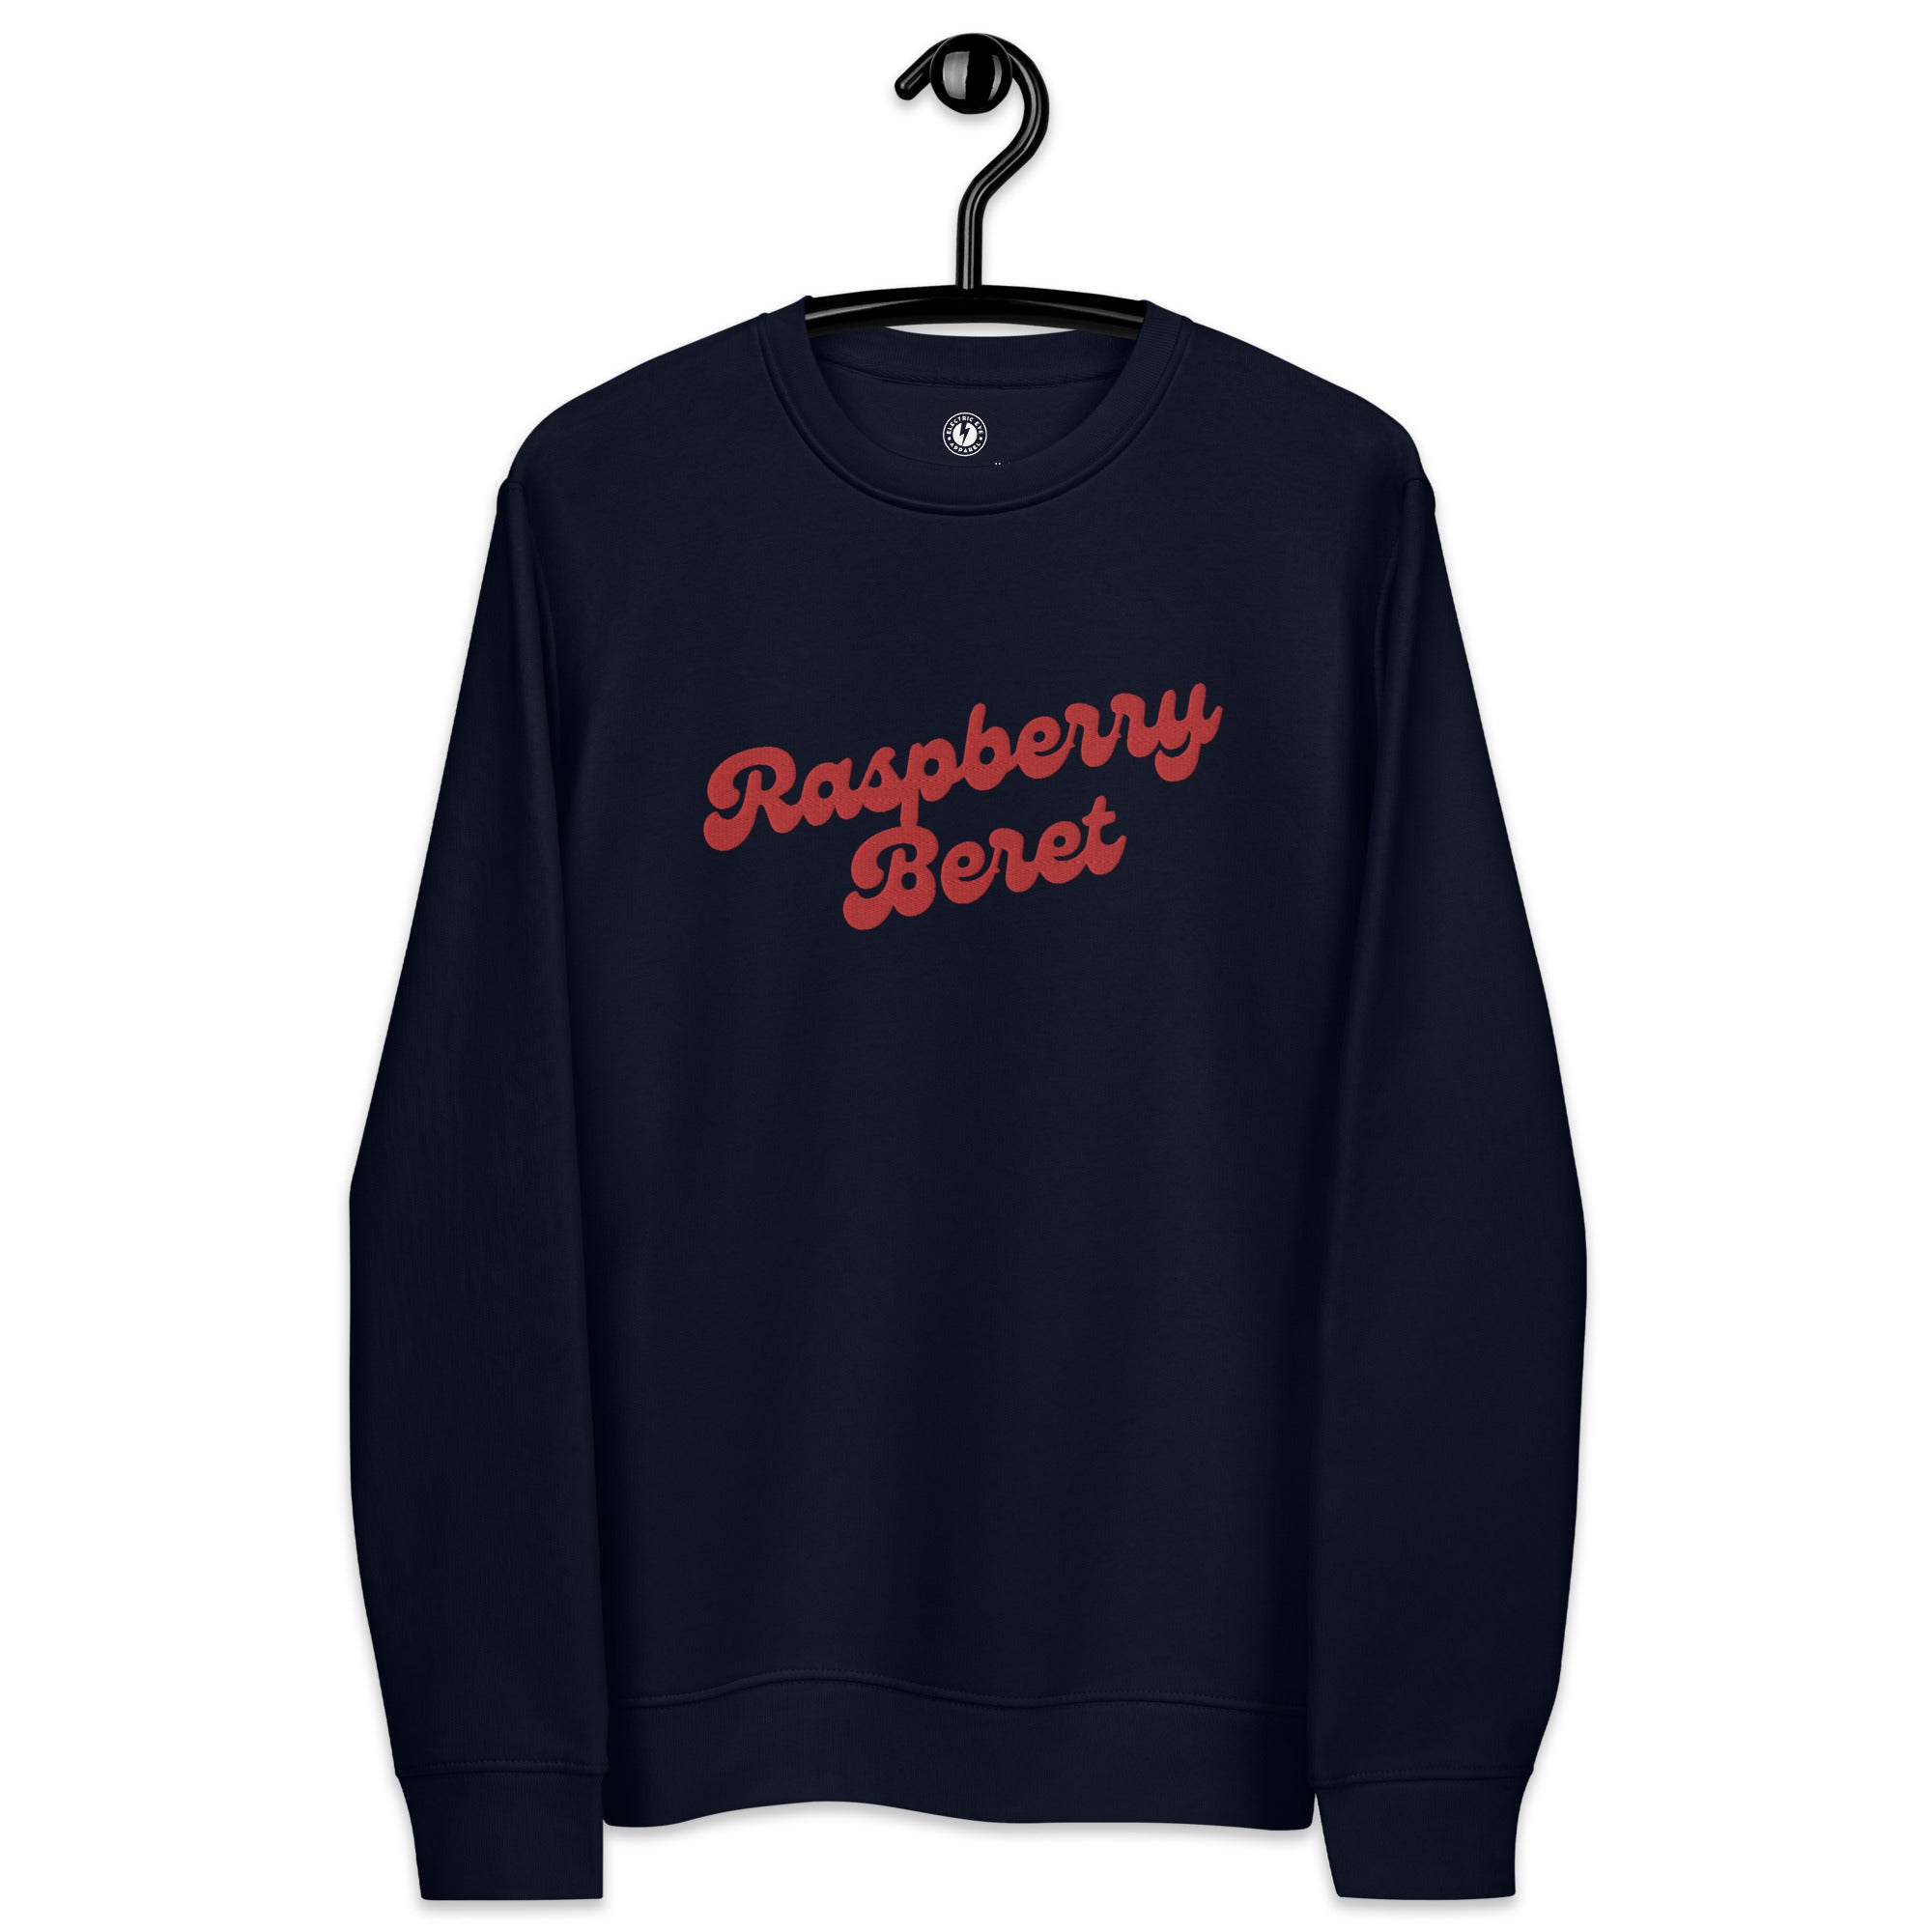 Raspberry Beret - 80's Style Premium Embroidered Unisex organic sweatshirt - red thread